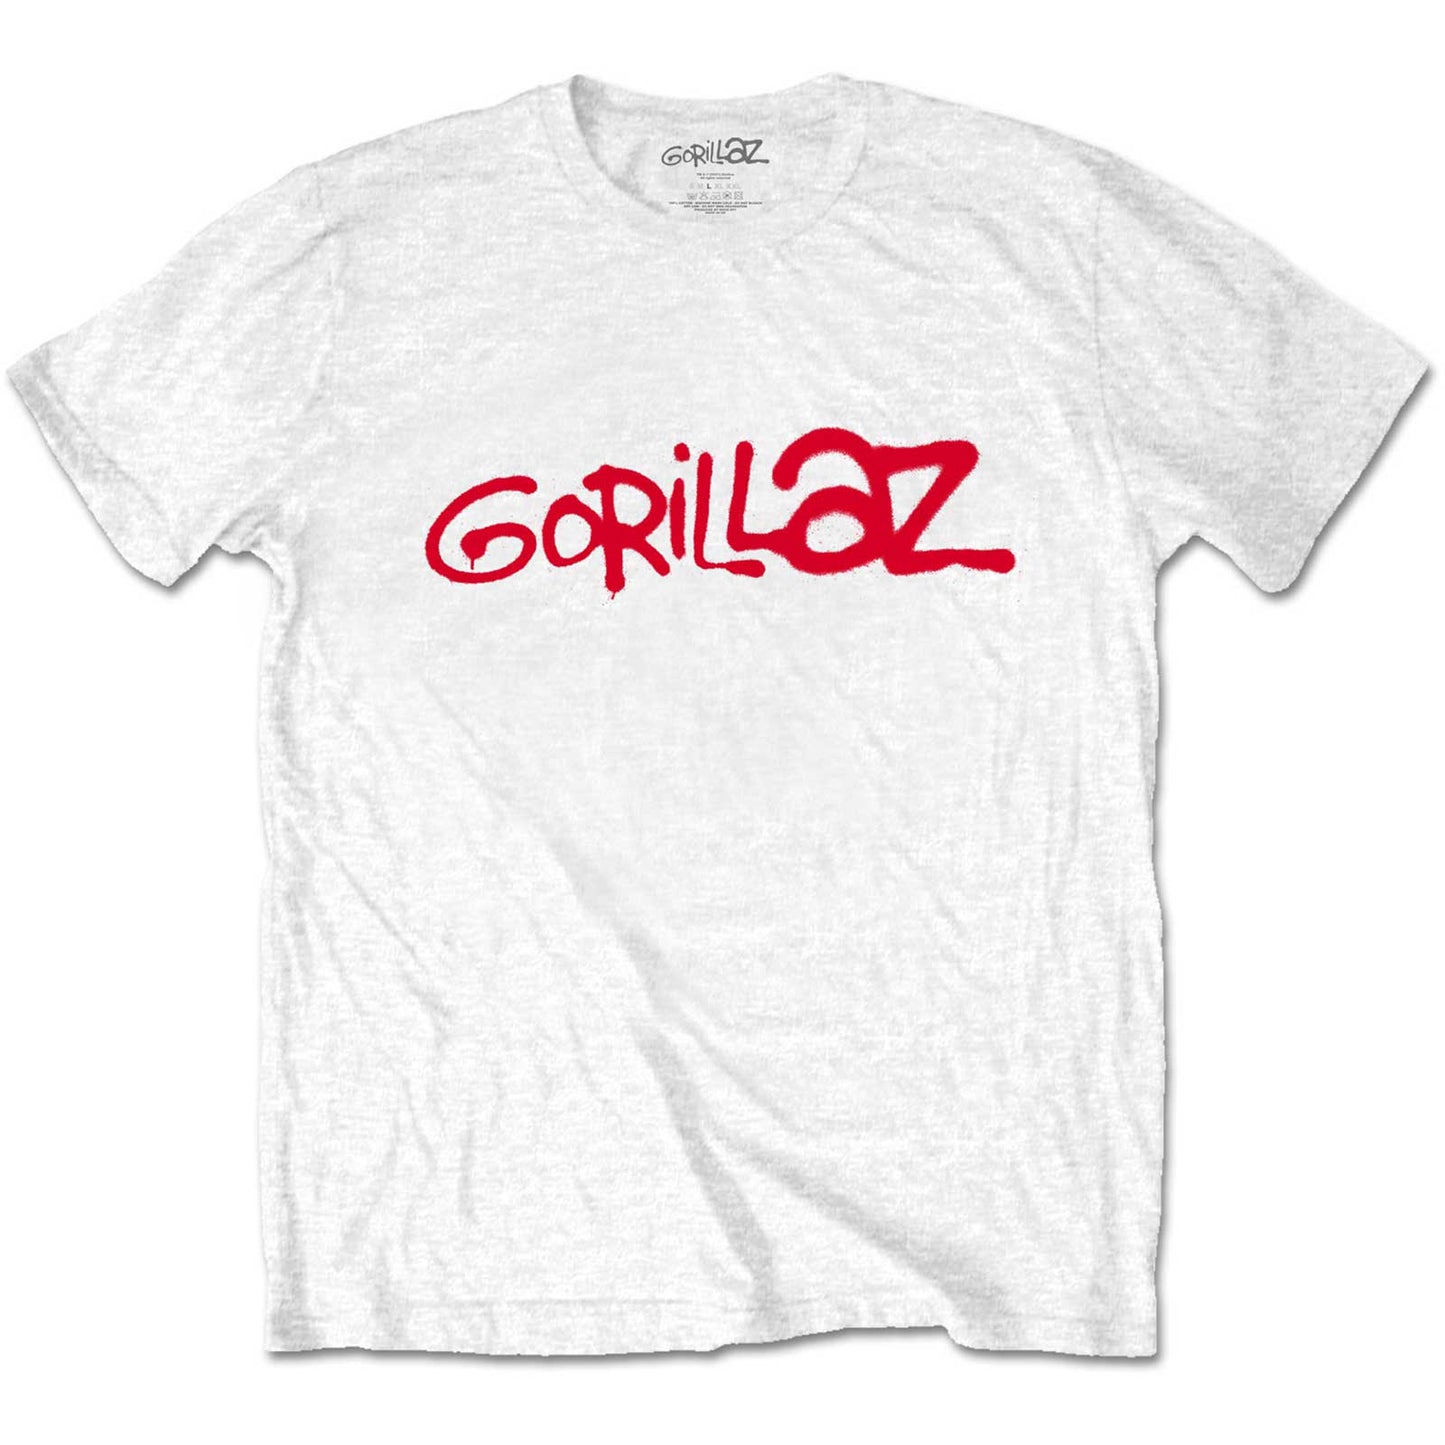 Gorillaz T-Shirt: Logo